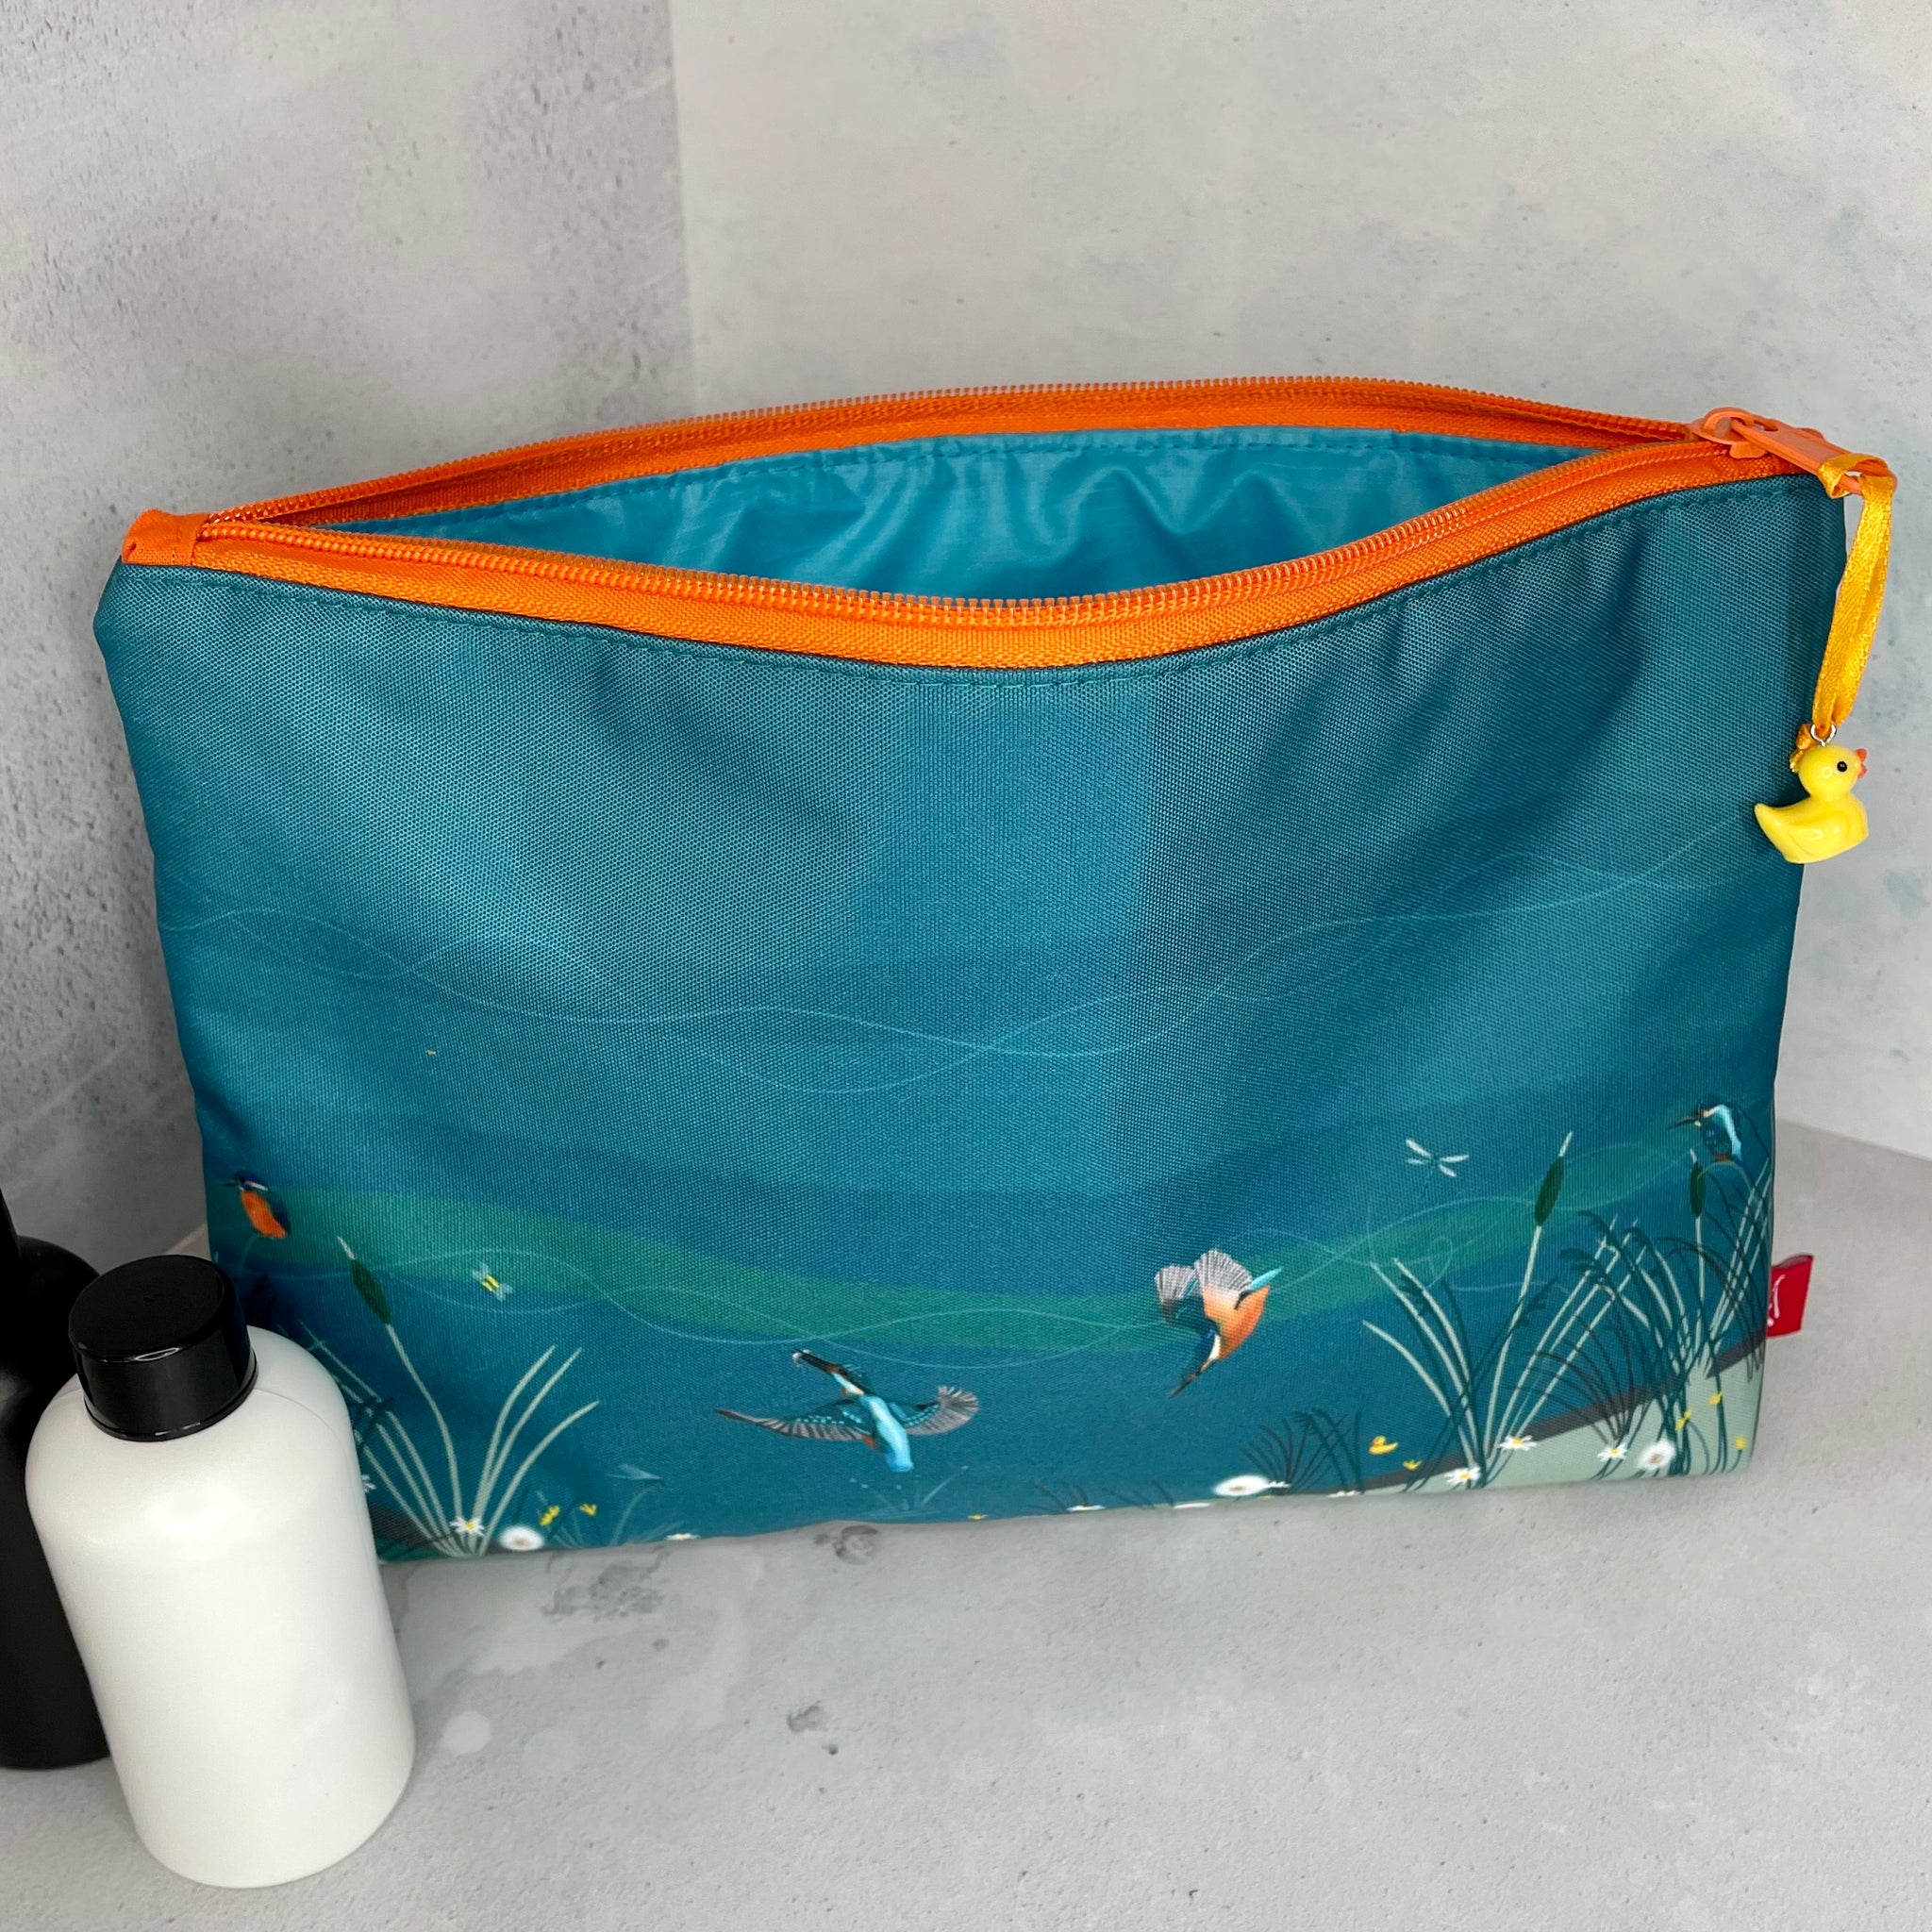 Waterproof swim pouch. Kingfishers design